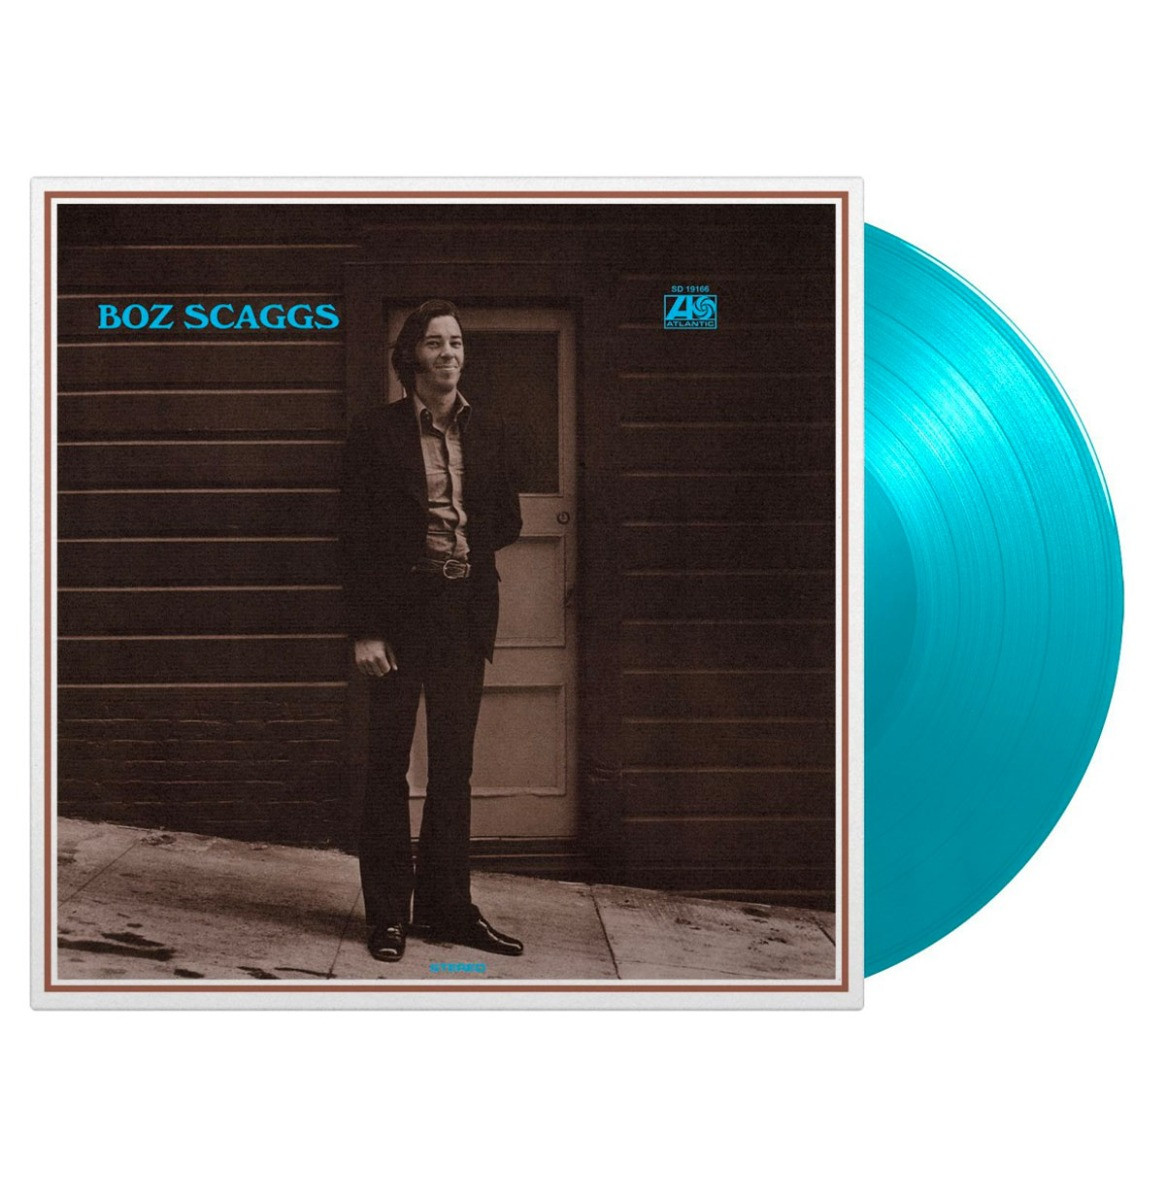 Boz Scaggs - Boz Scaggs (Gekleurd Vinyl) LP